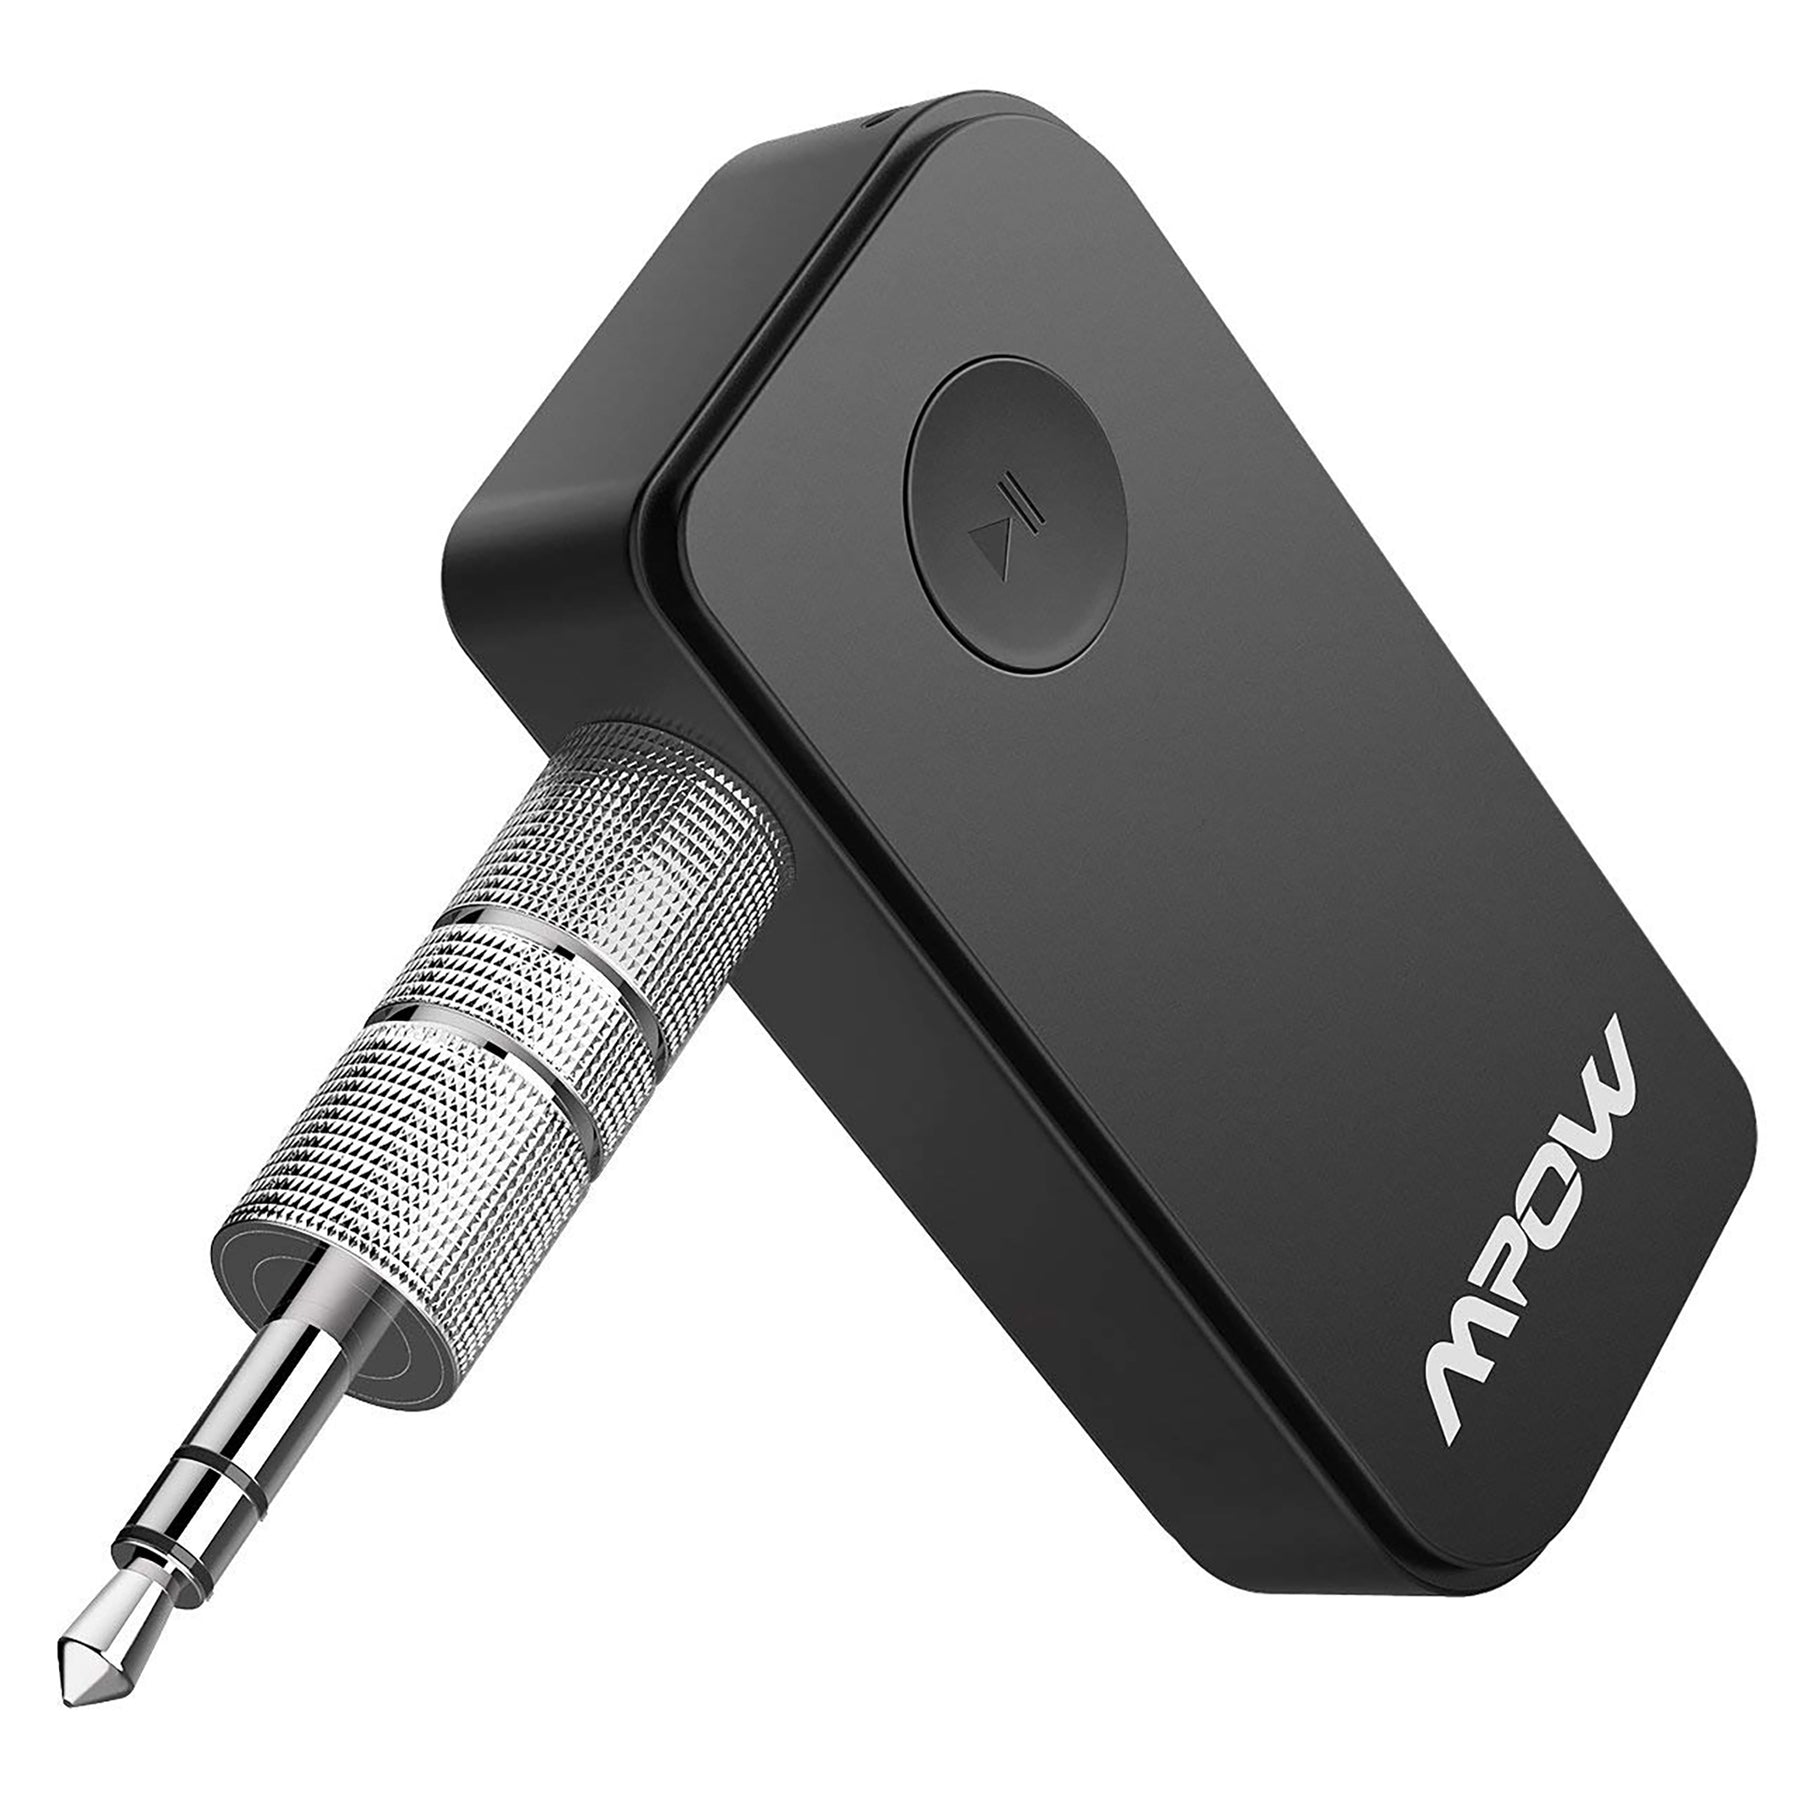 Car Bluetooth Audio Receiving Module 3.5MM Headphone Jack Input